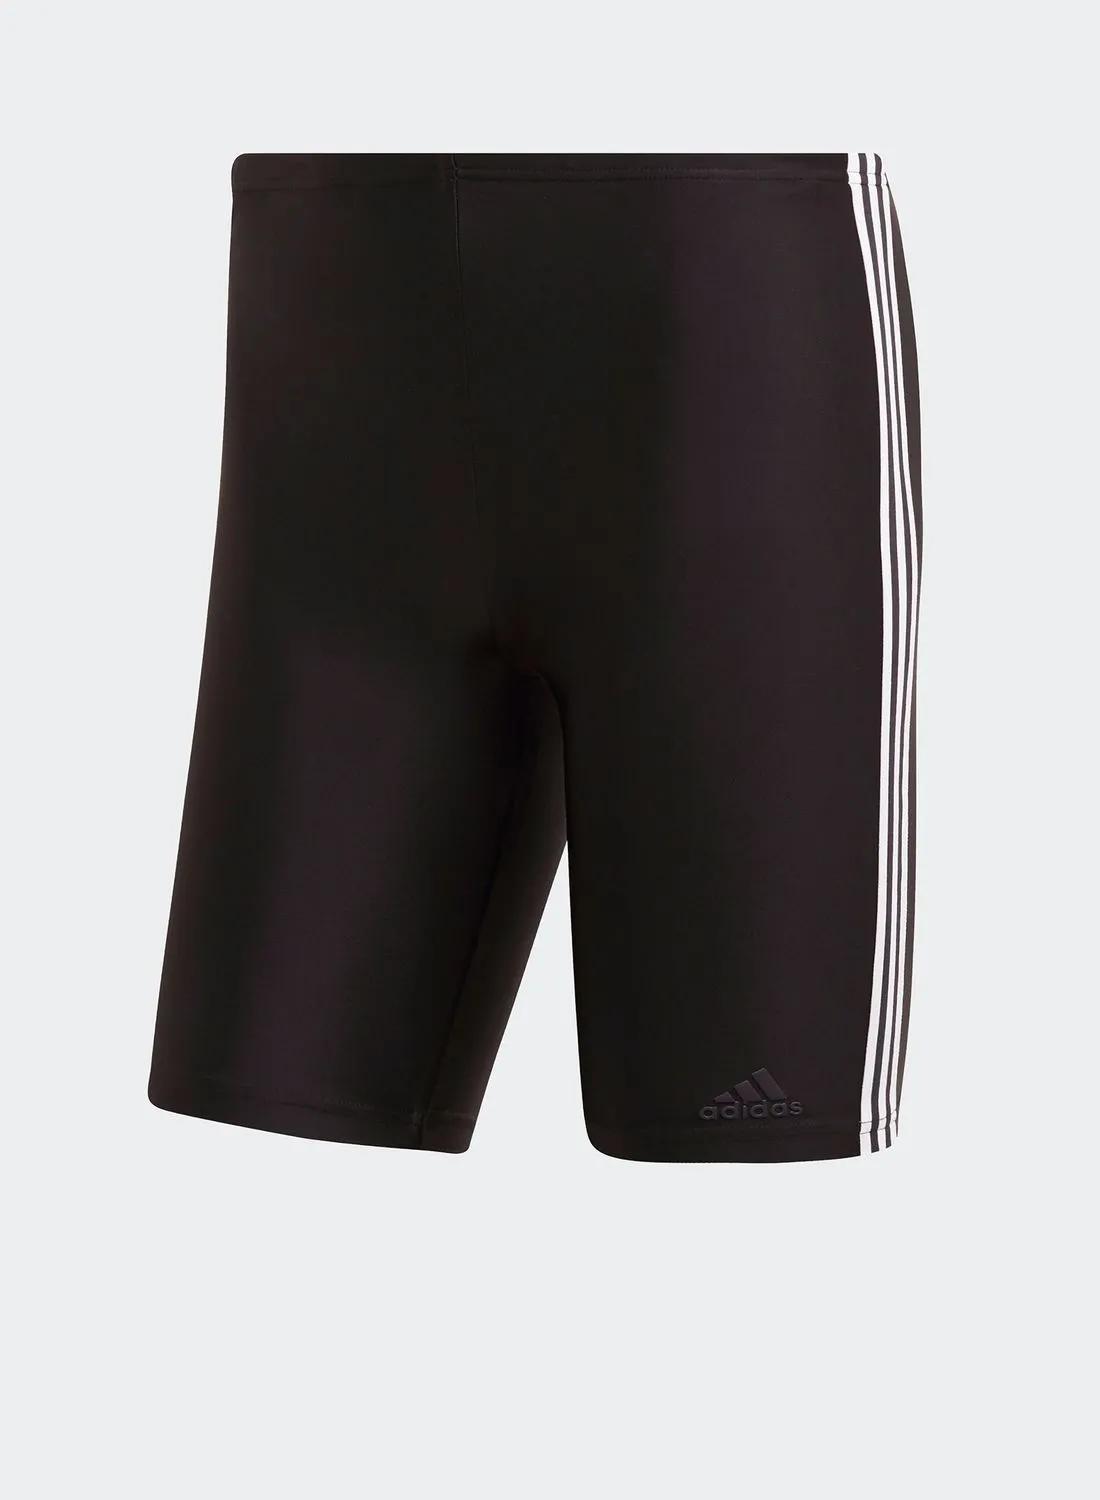 Adidas 3 Stripe Fit Jammer Swim Shorts